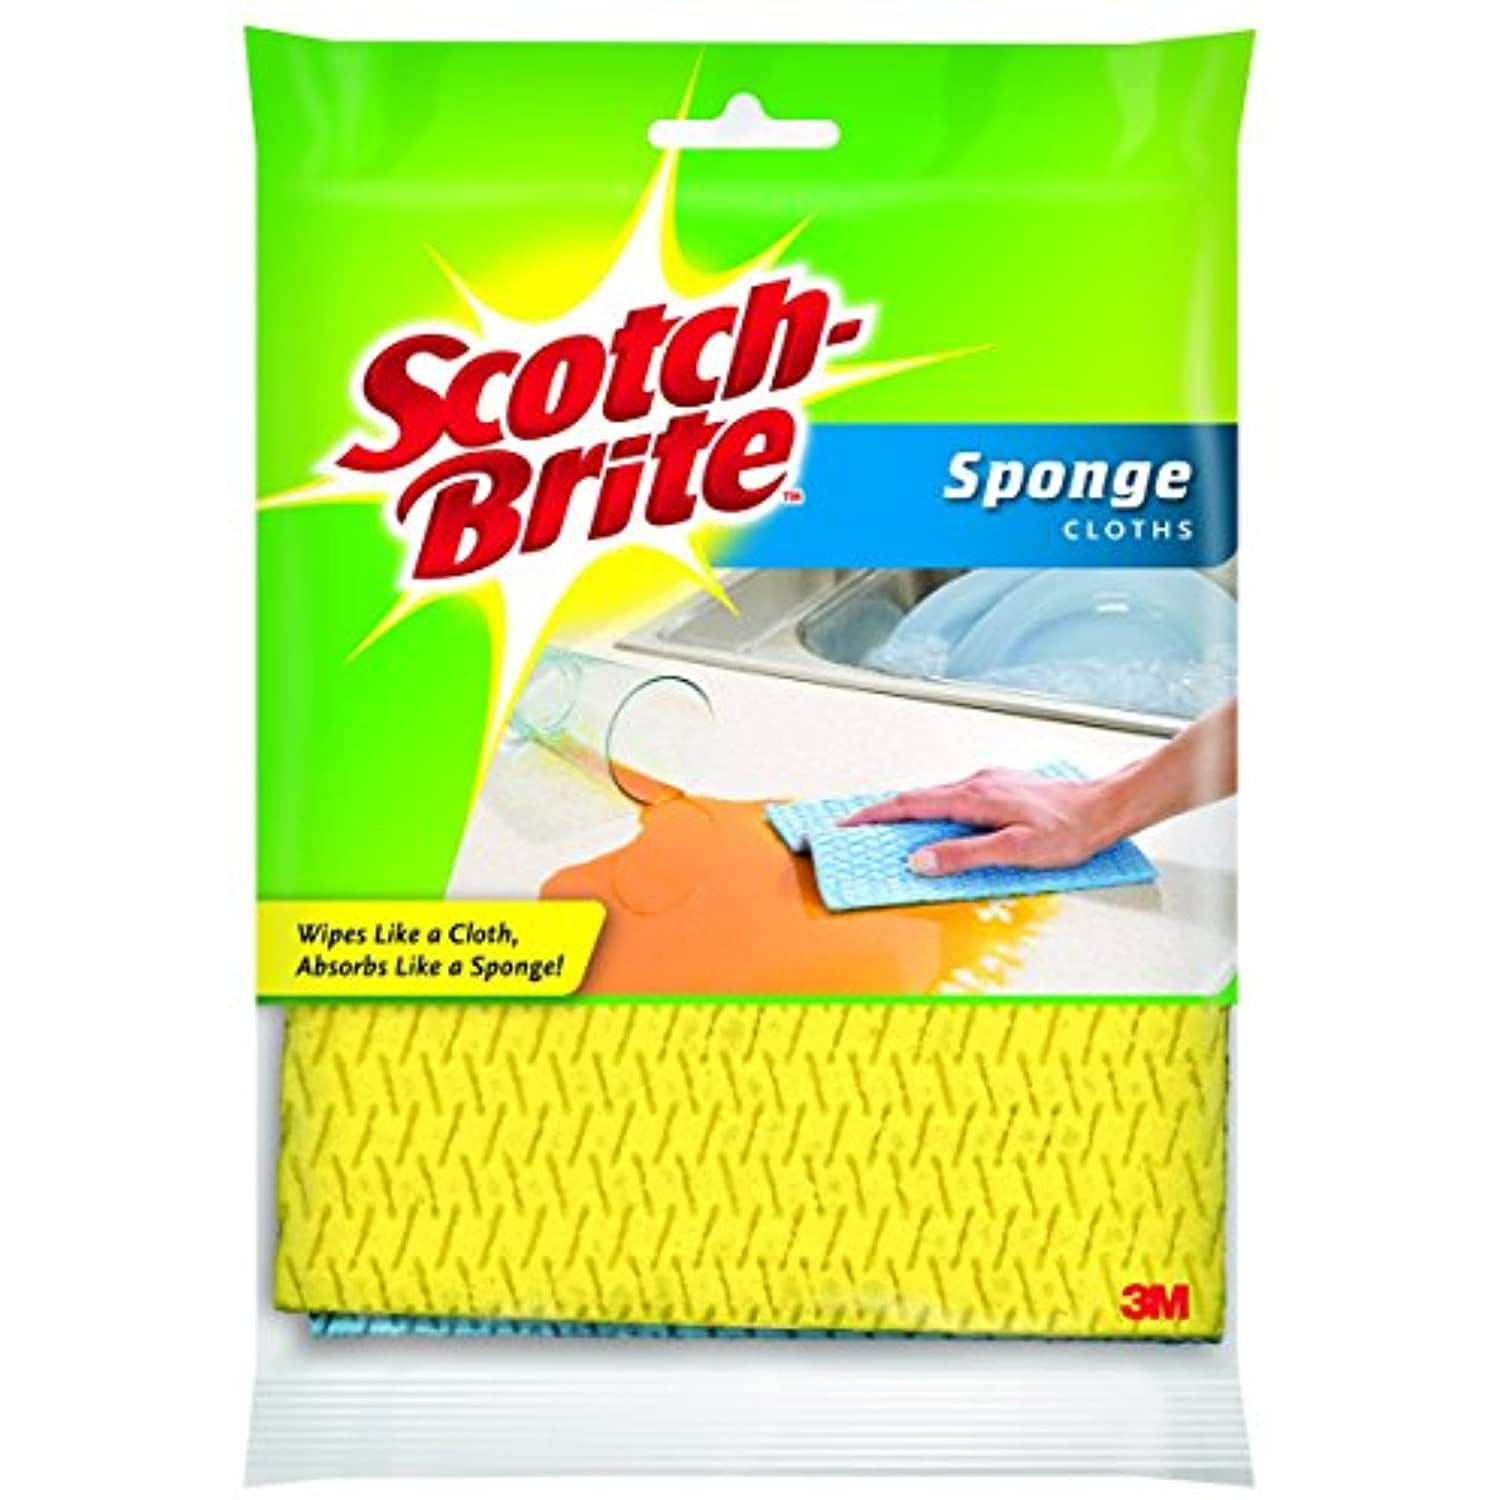 Scotch-Brite Sponge Cloths, 2/Pack